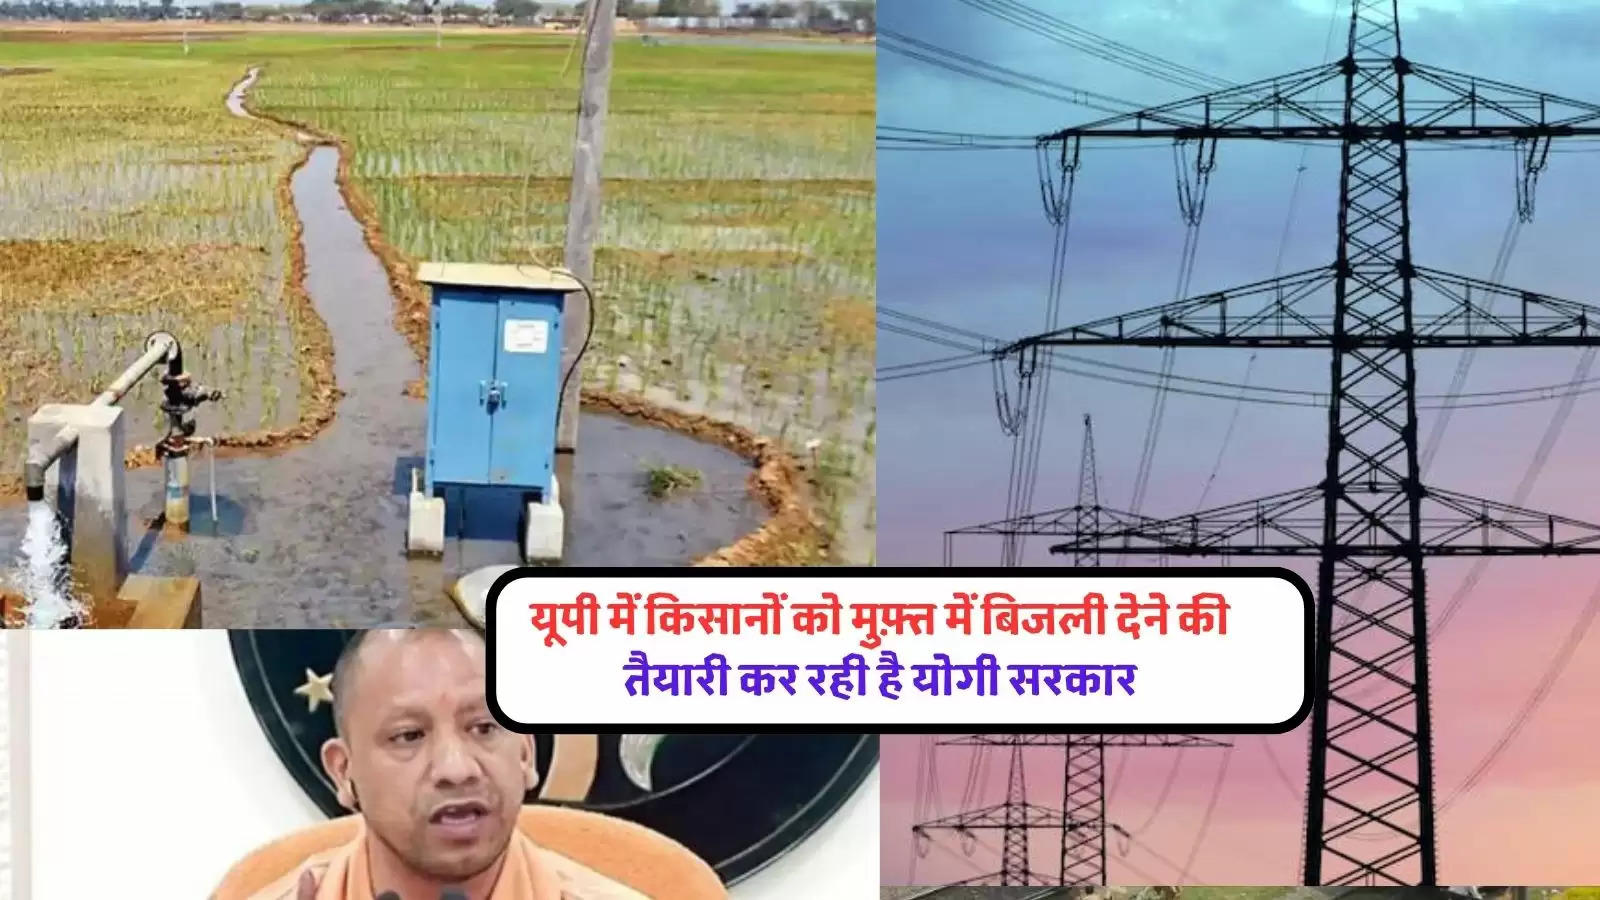 uttar-pradesh-farmers-will-get-free-electricity-know-about-yogi-adityanath-government